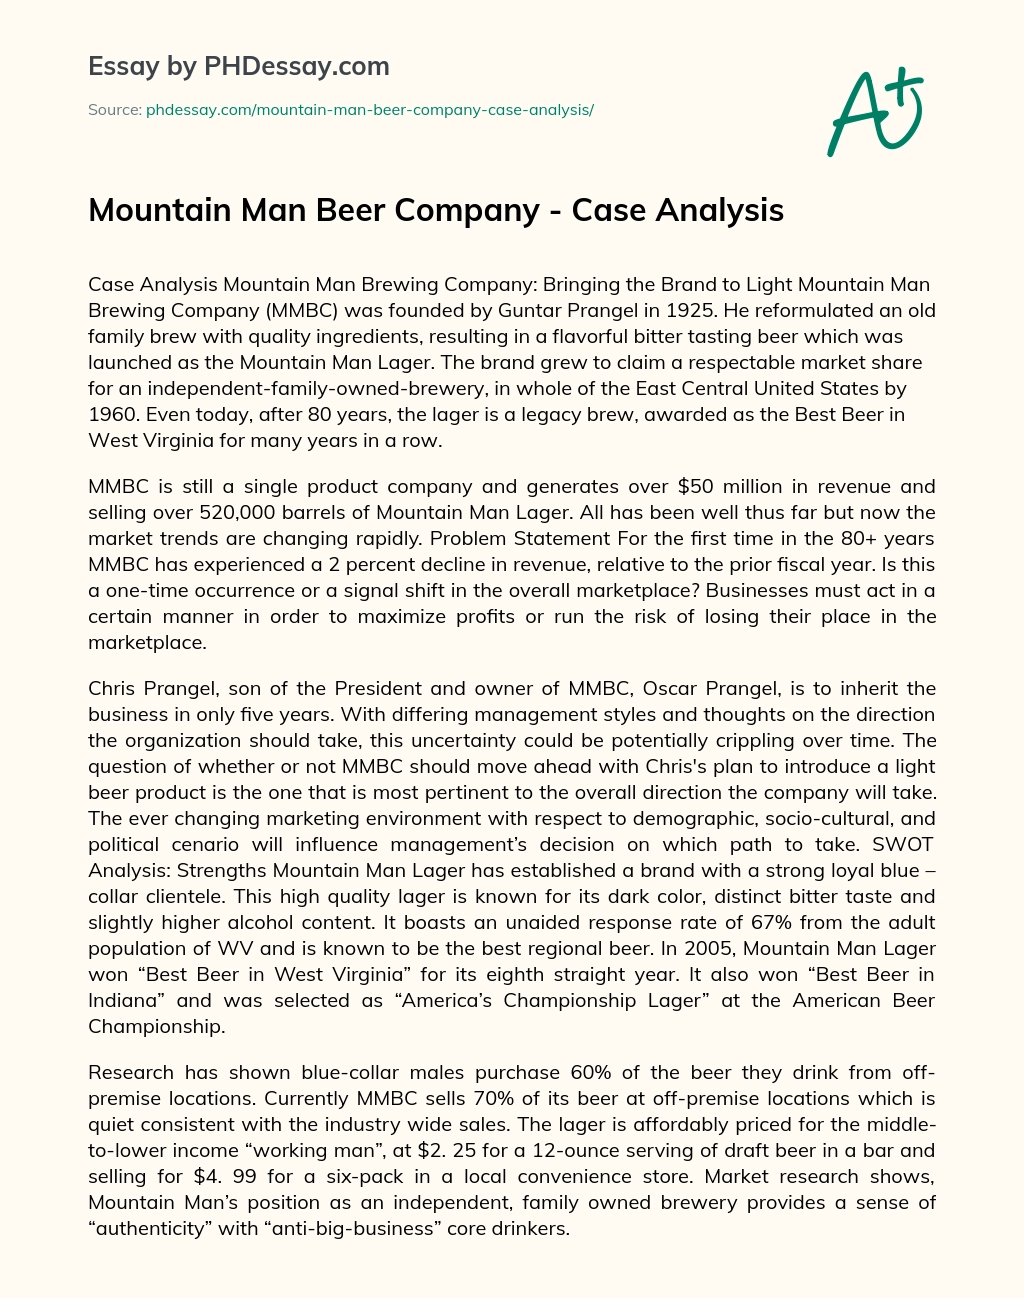 Mountain Man Beer Company – Case Analysis essay